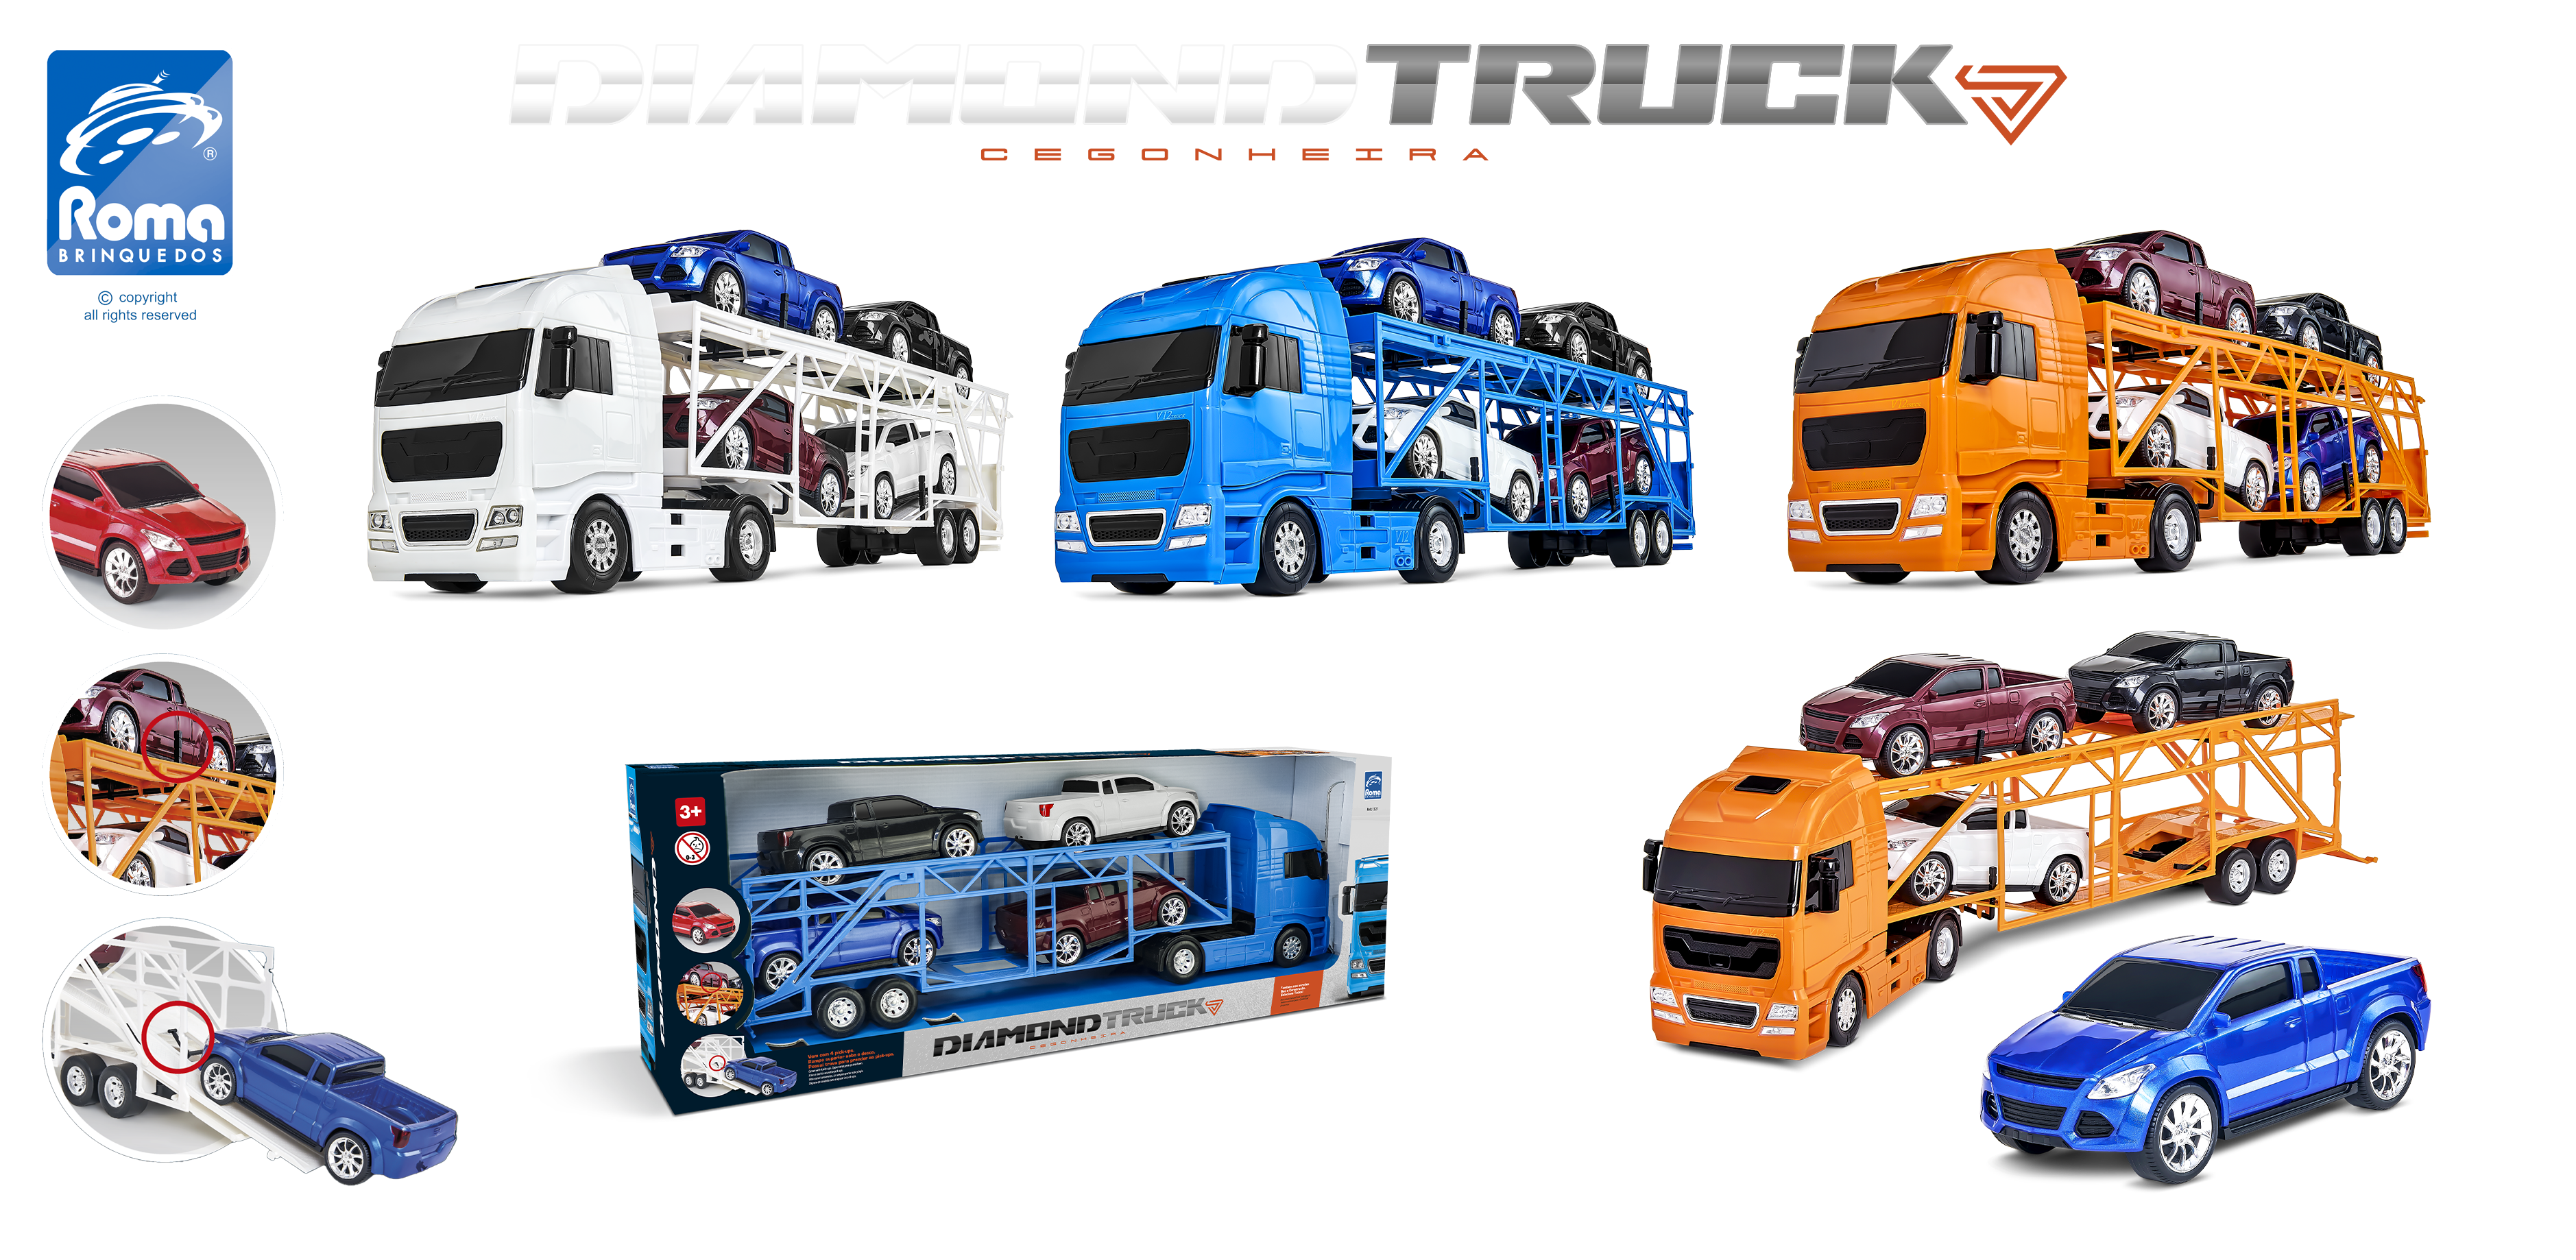 1321 - Diamond Truck - Cegonheira.png